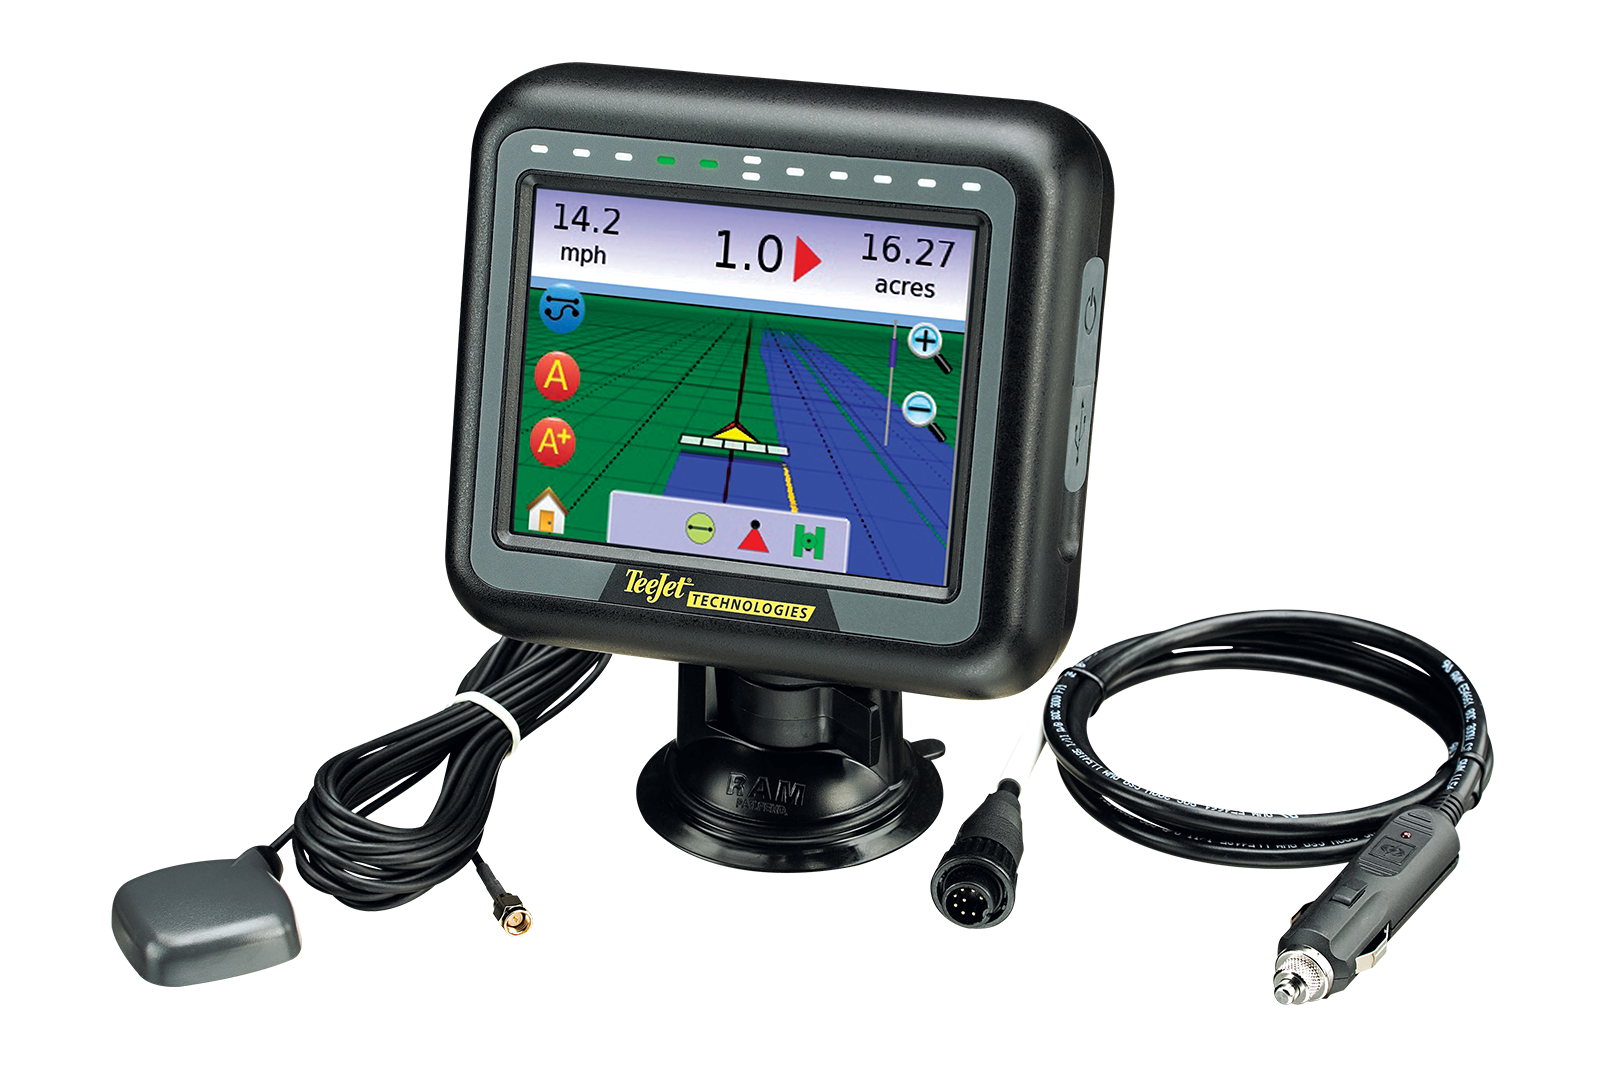 TeeJet Matrix 570G GPS Guidance System